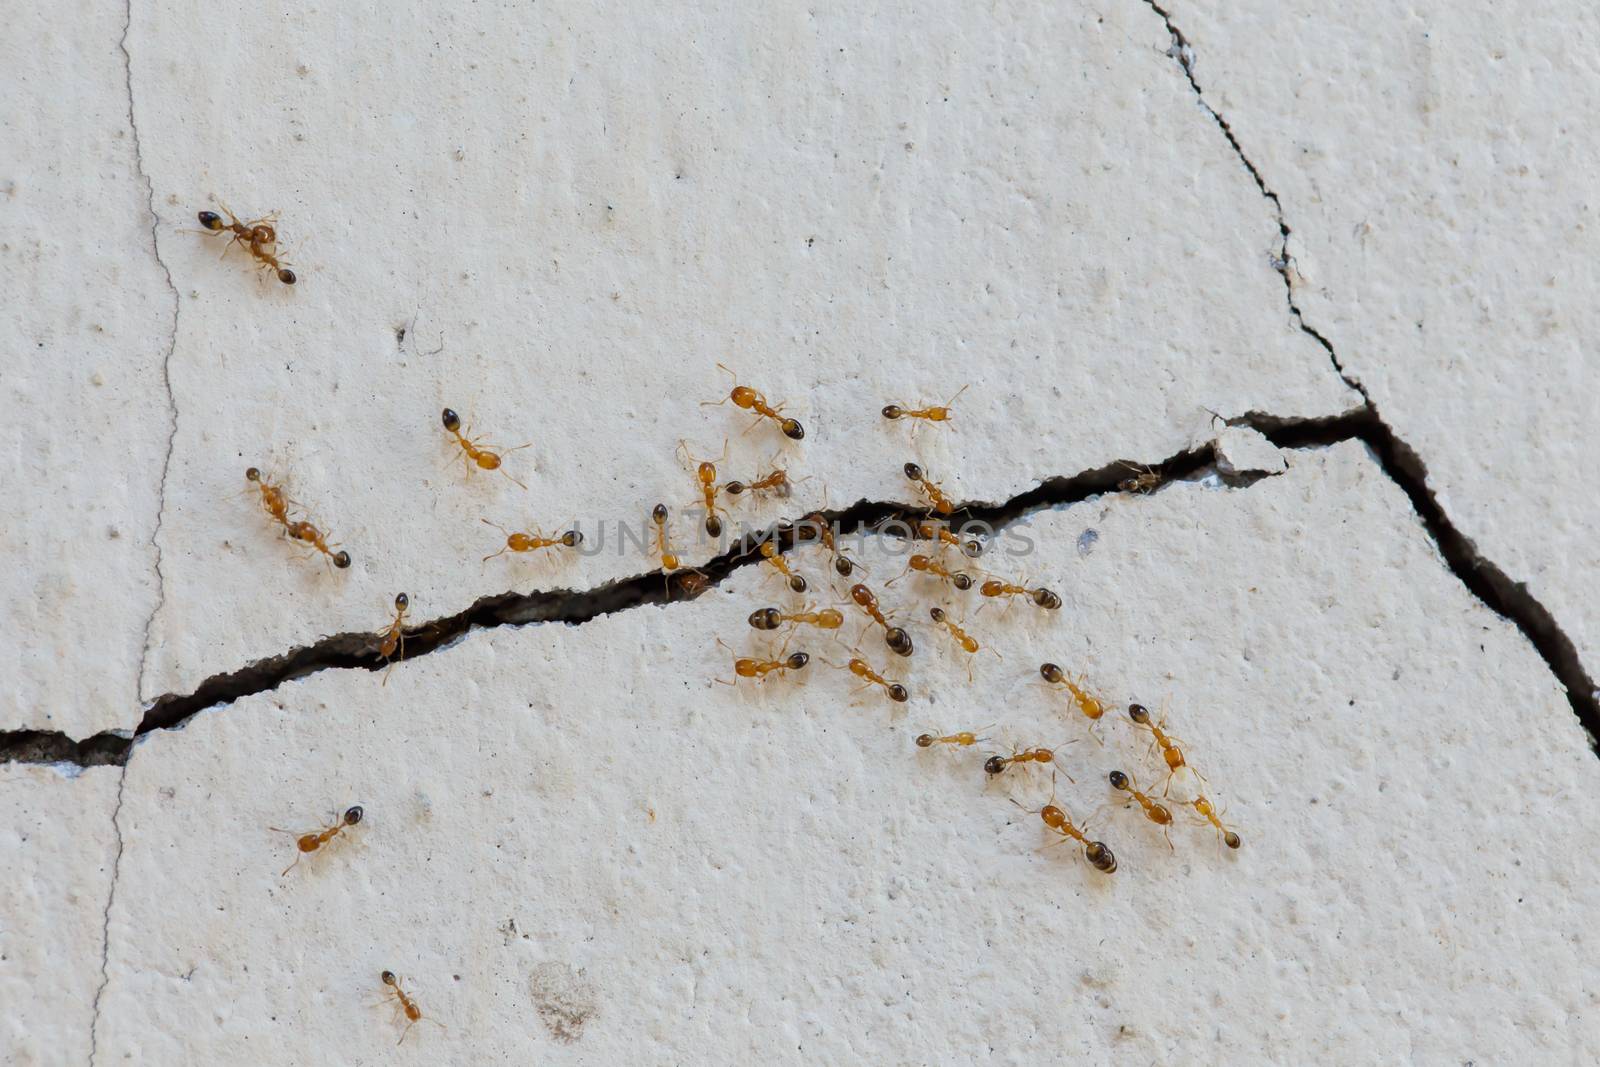 Ants climb walls by Natstocker